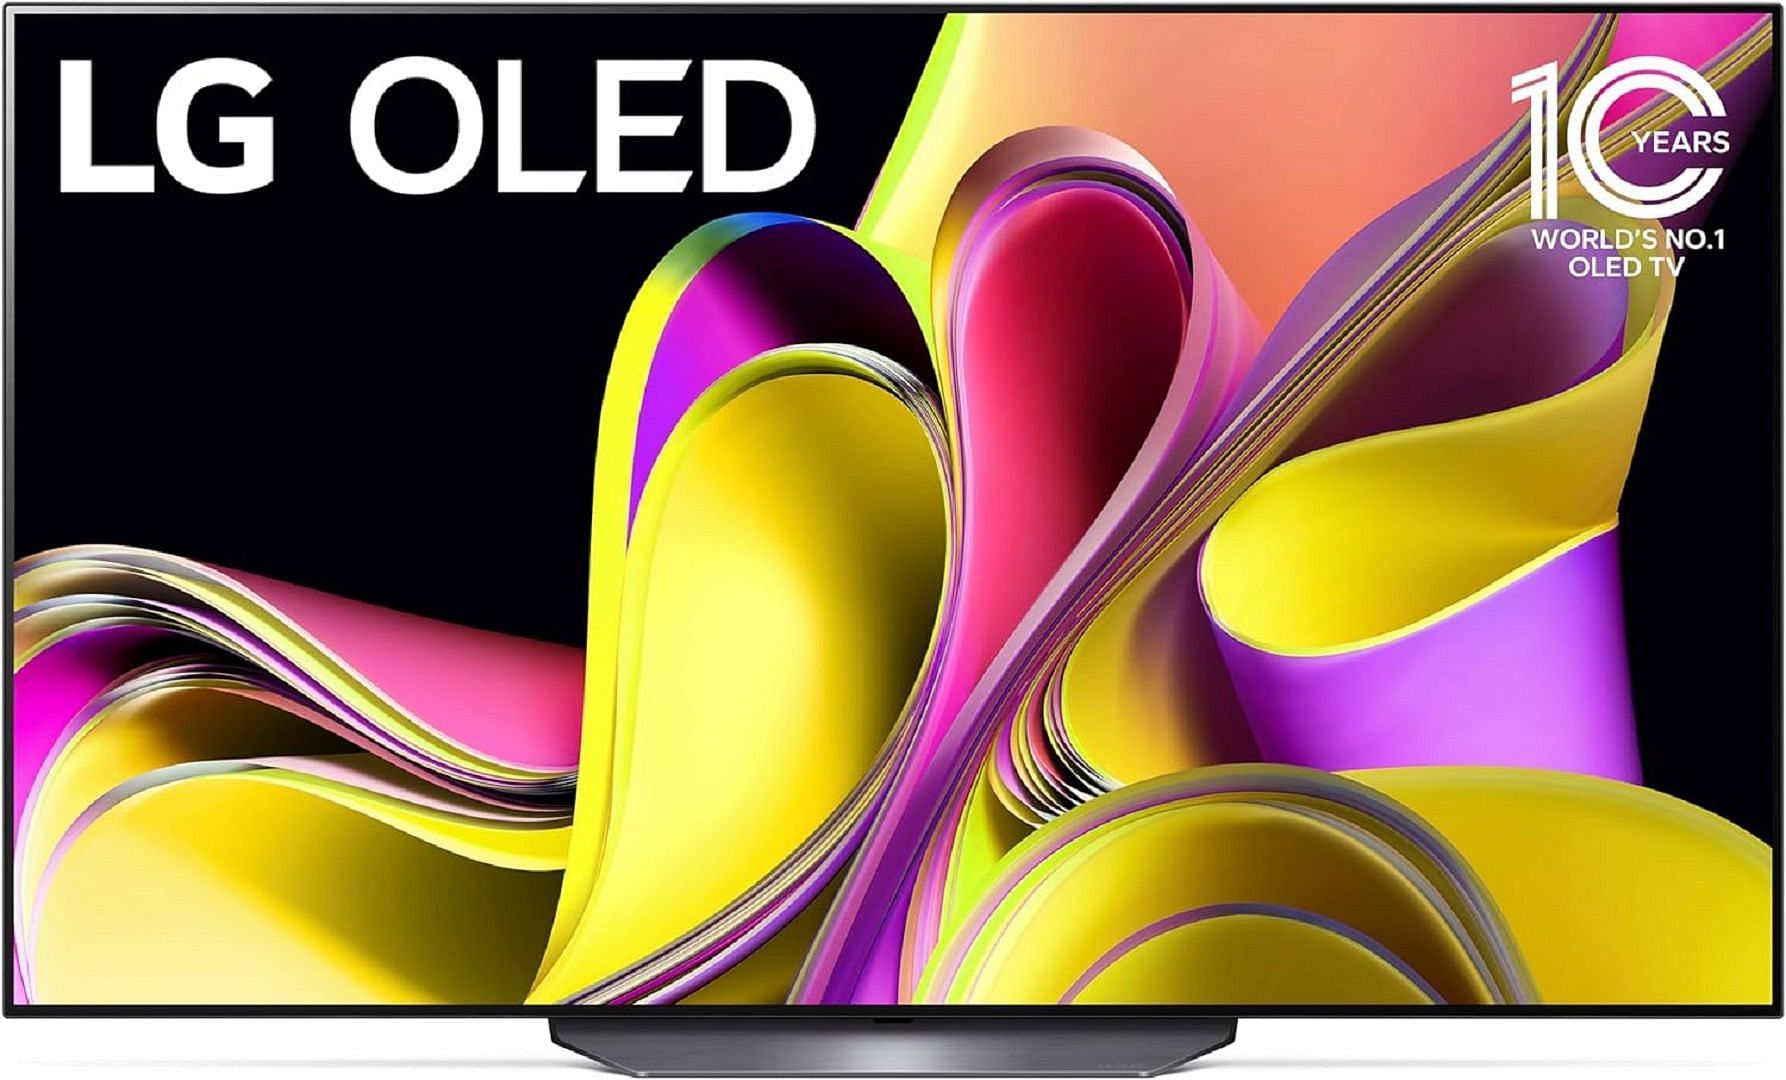 LG B3 65-inch OLED TV (Image via LG)